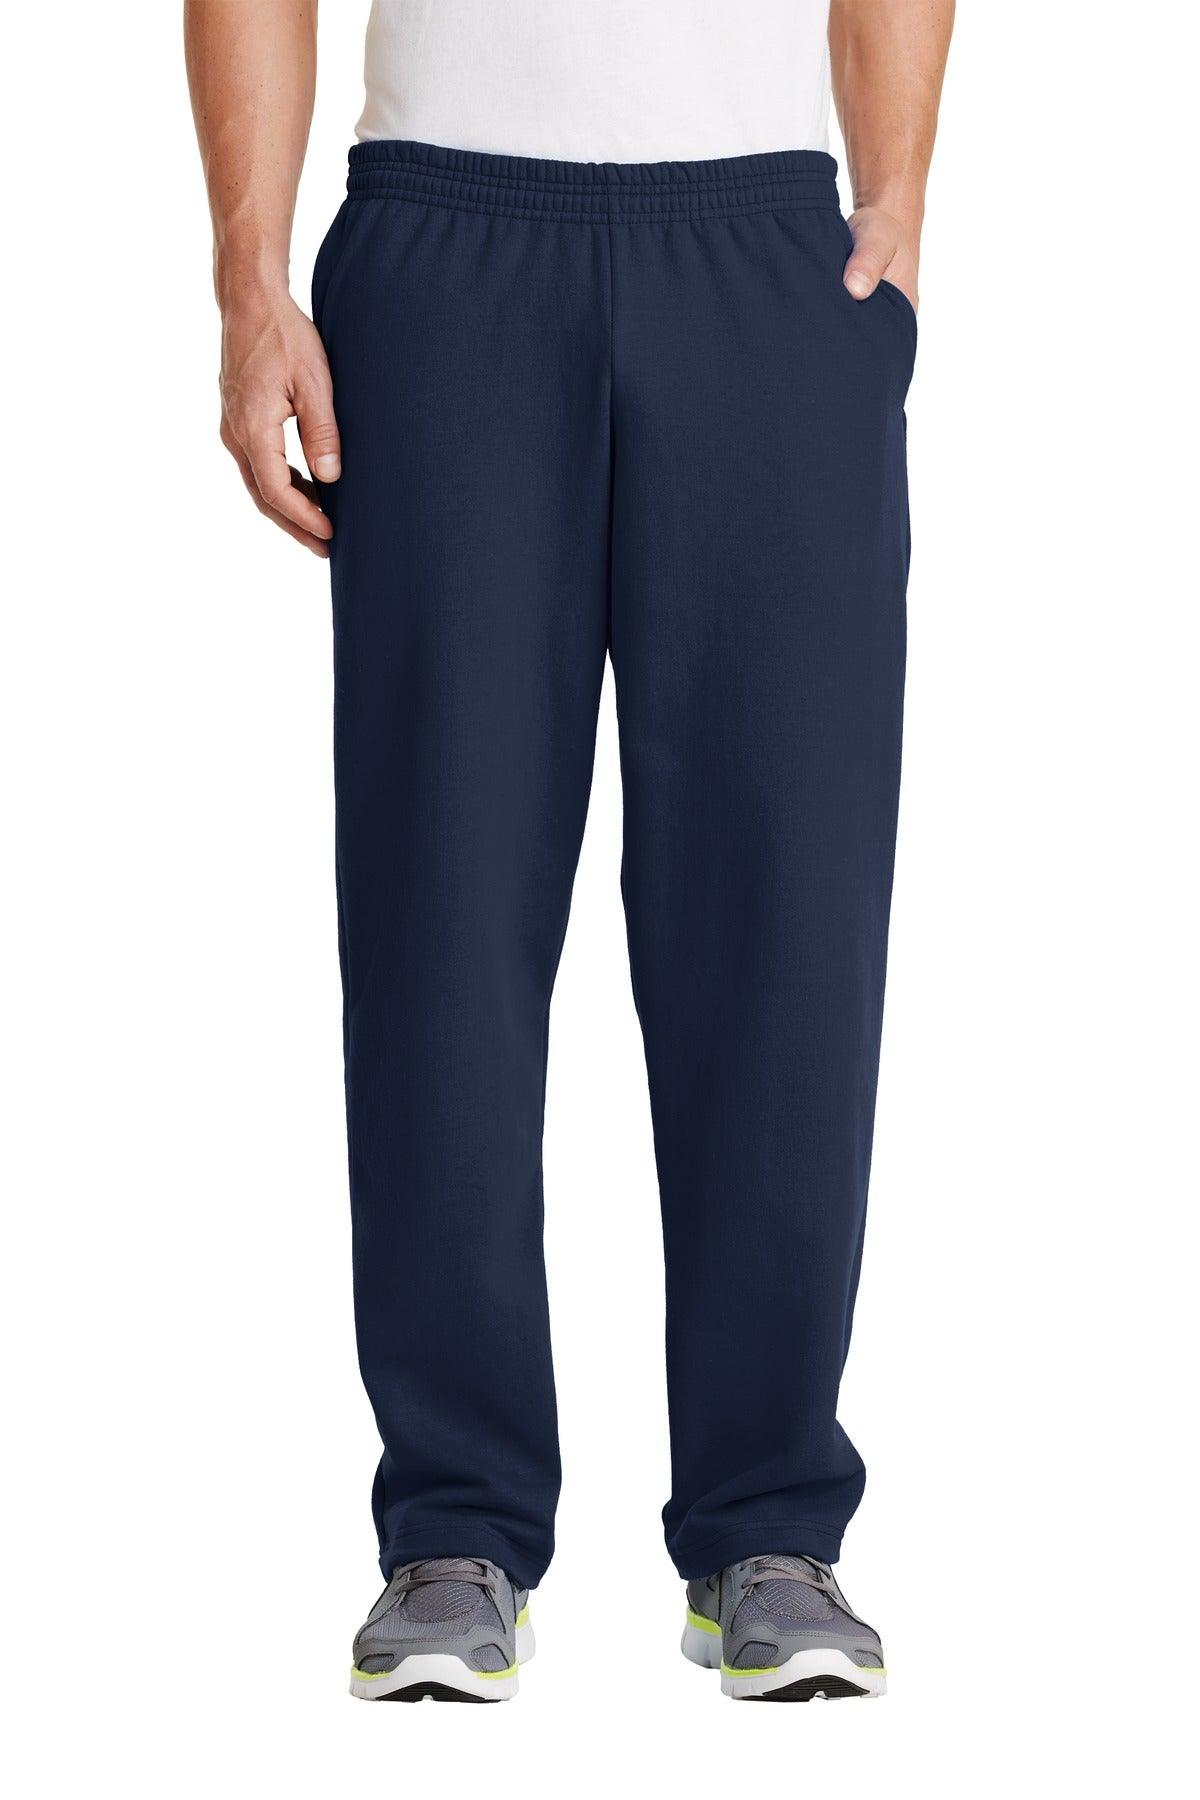 Port & Company - Core Fleece Sweatpant with Pockets. PC78P - Dresses Max